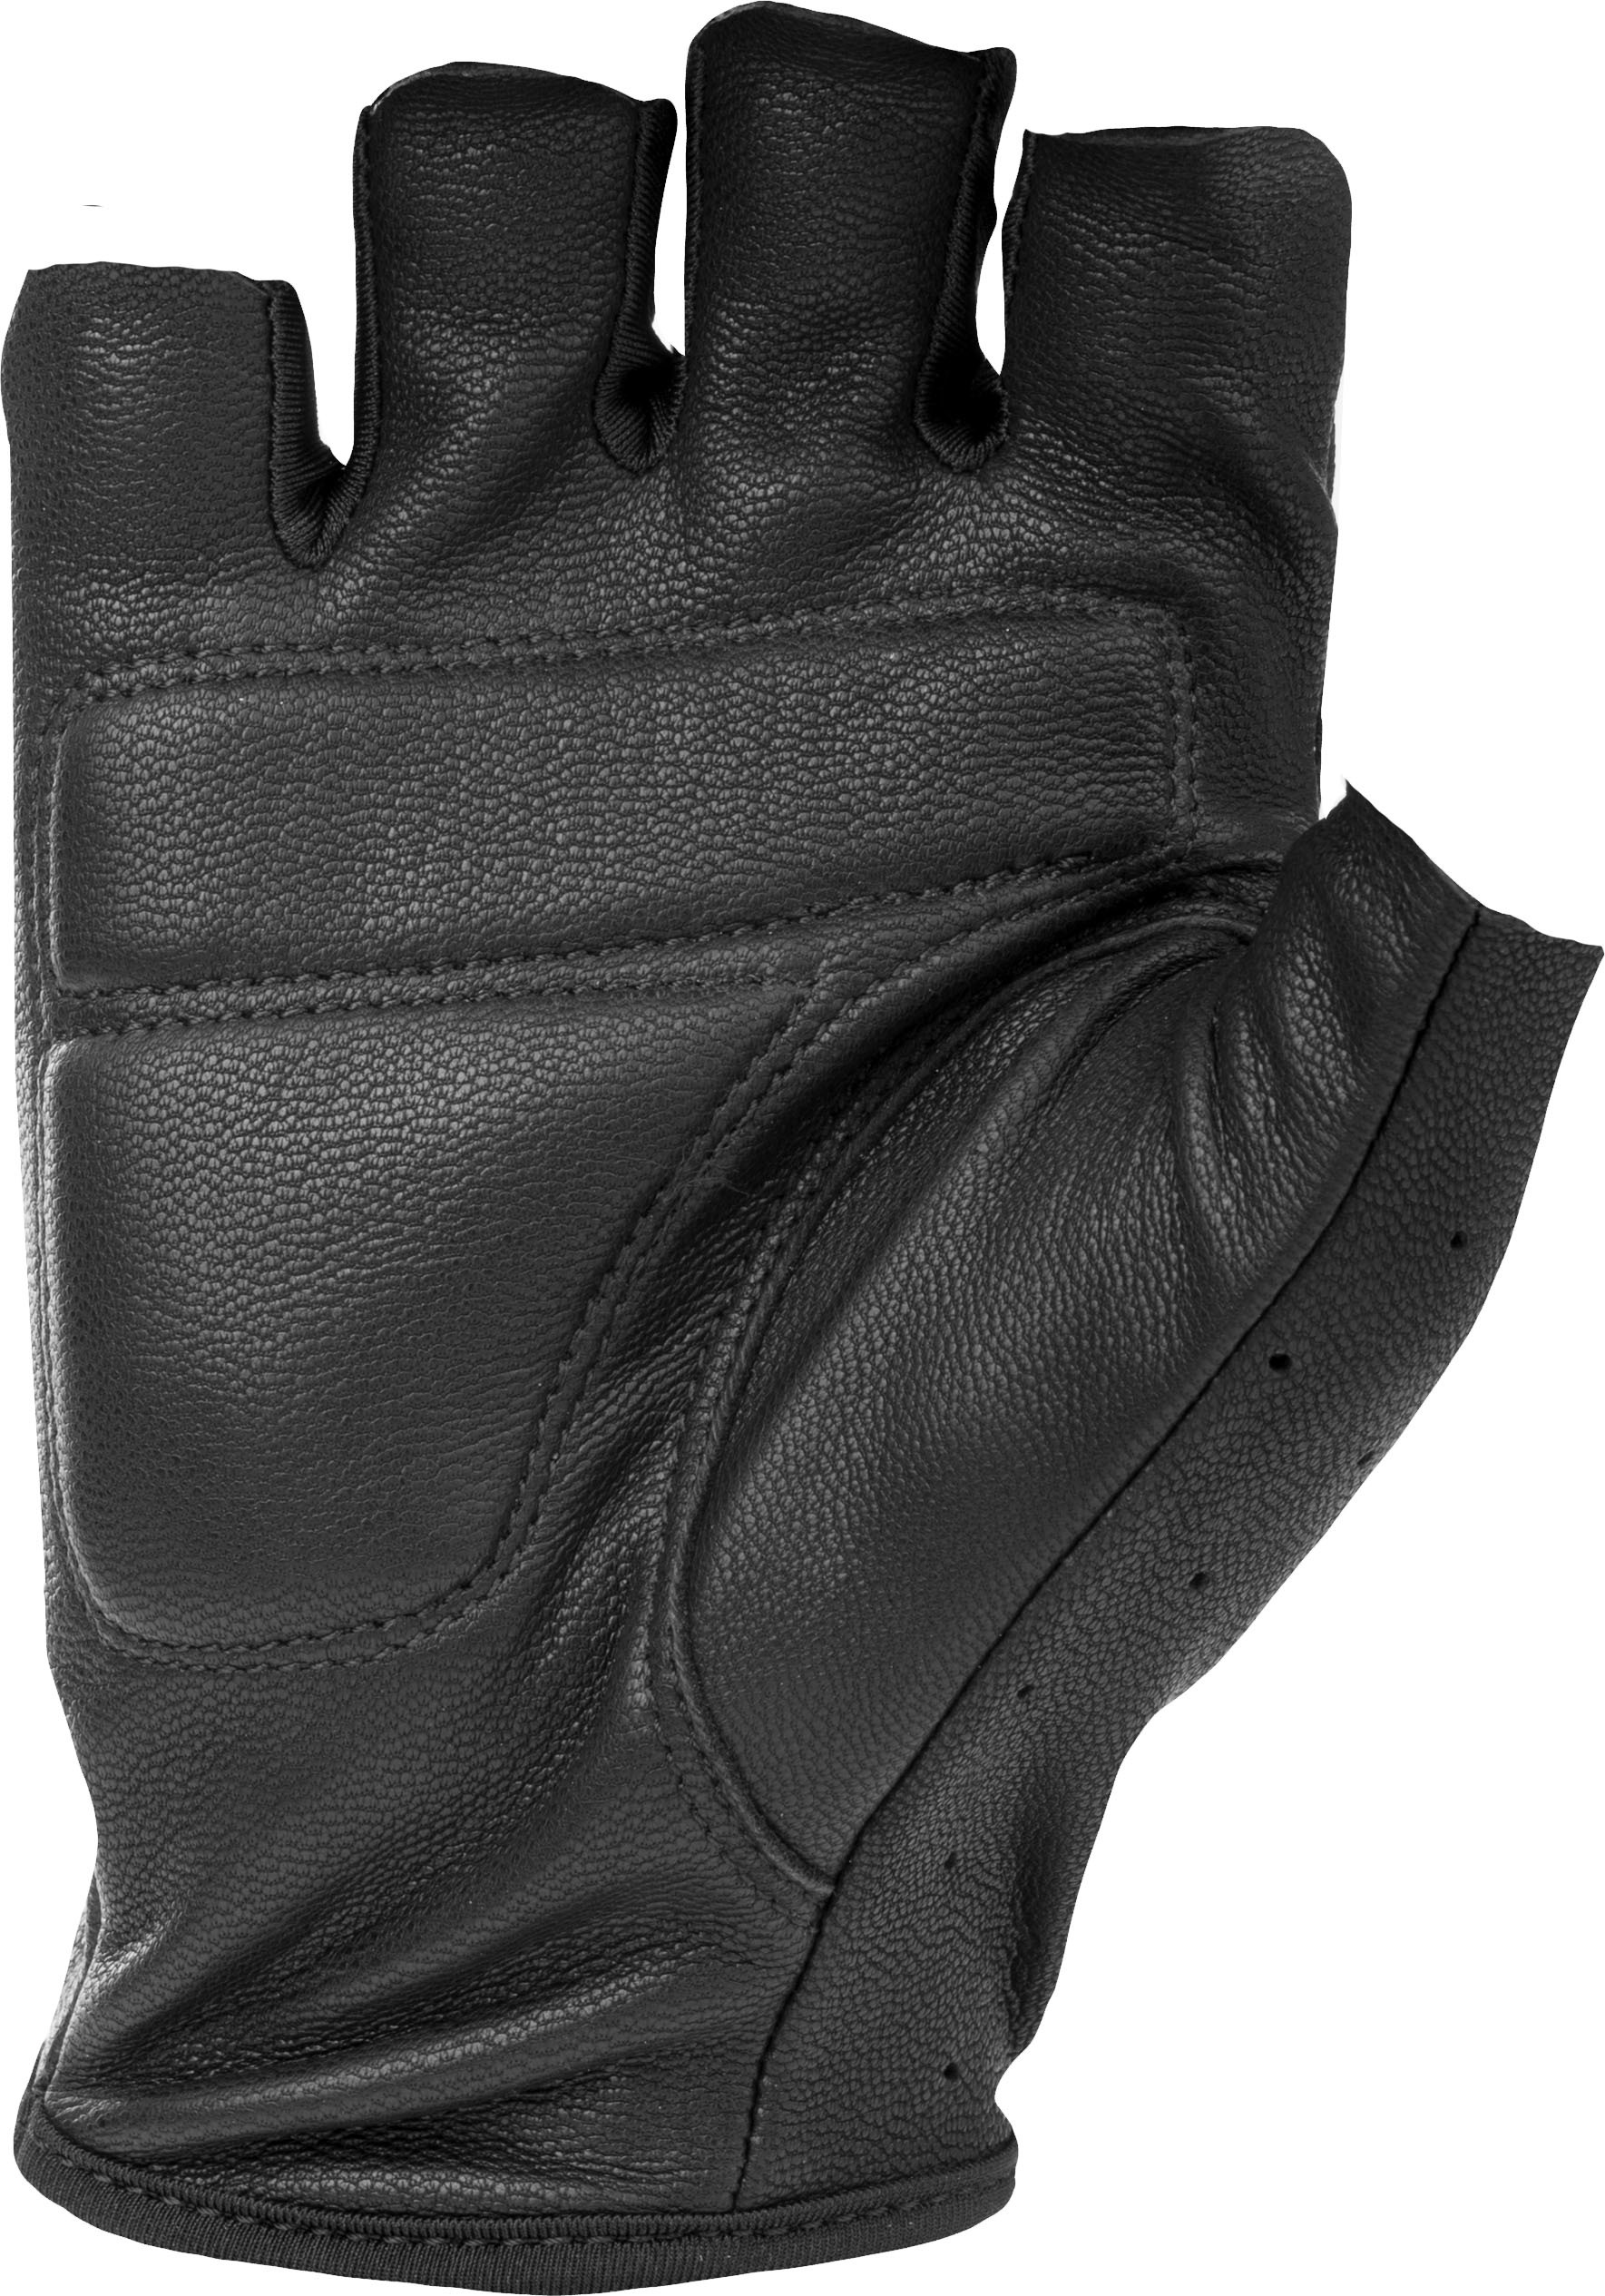 Ranger Riding Gloves Black Medium - Click Image to Close